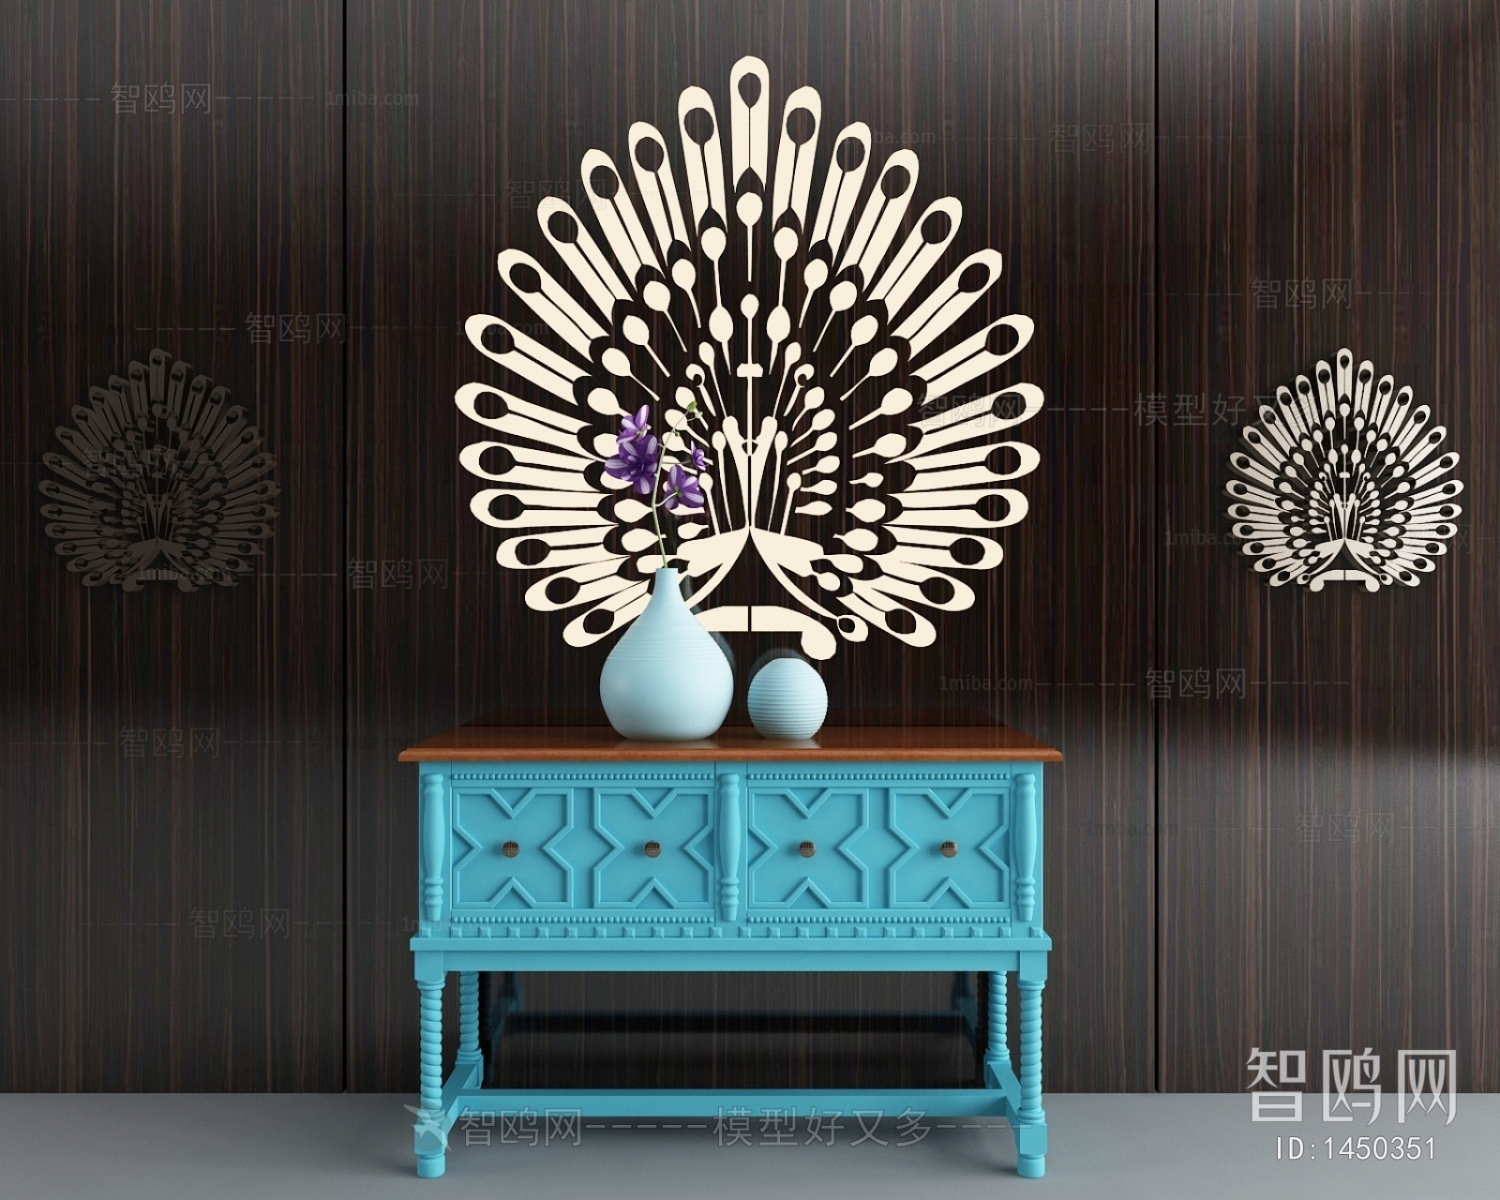 Southeast Asian Style Decorative Cabinet